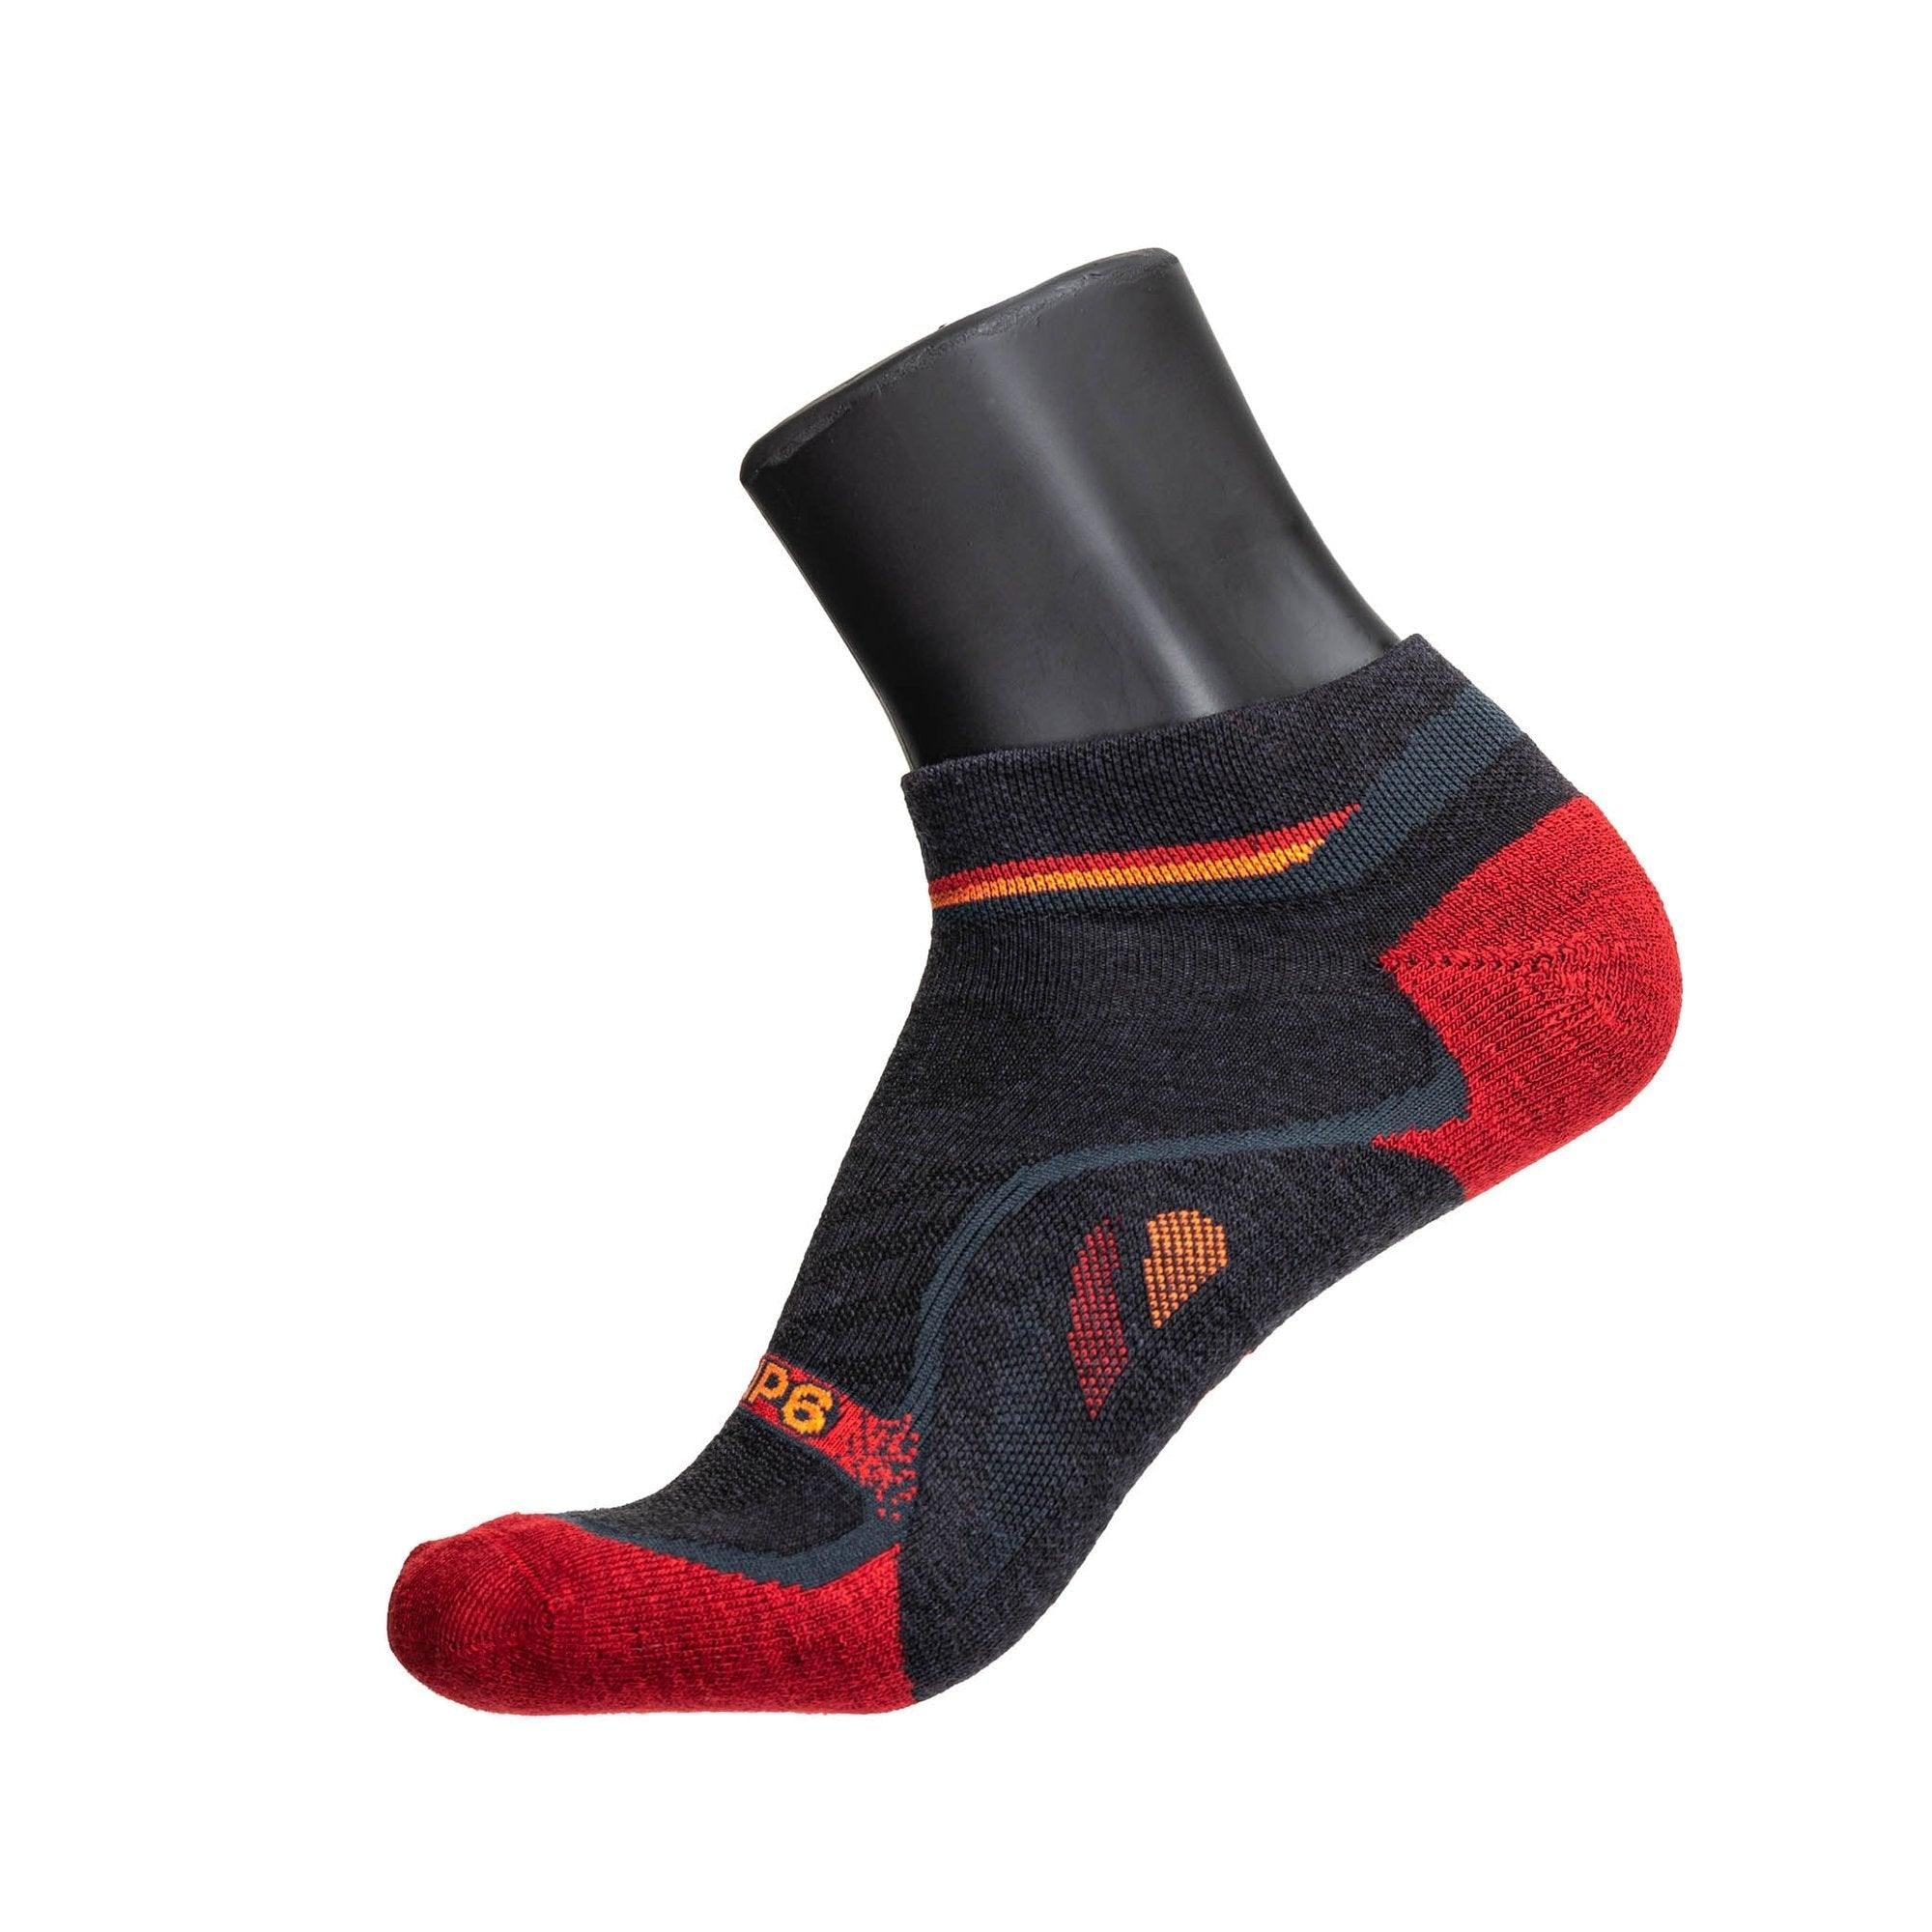 Grip6 Fastback Zion Wool Ankle Sock - Trusted Gear Company LLC